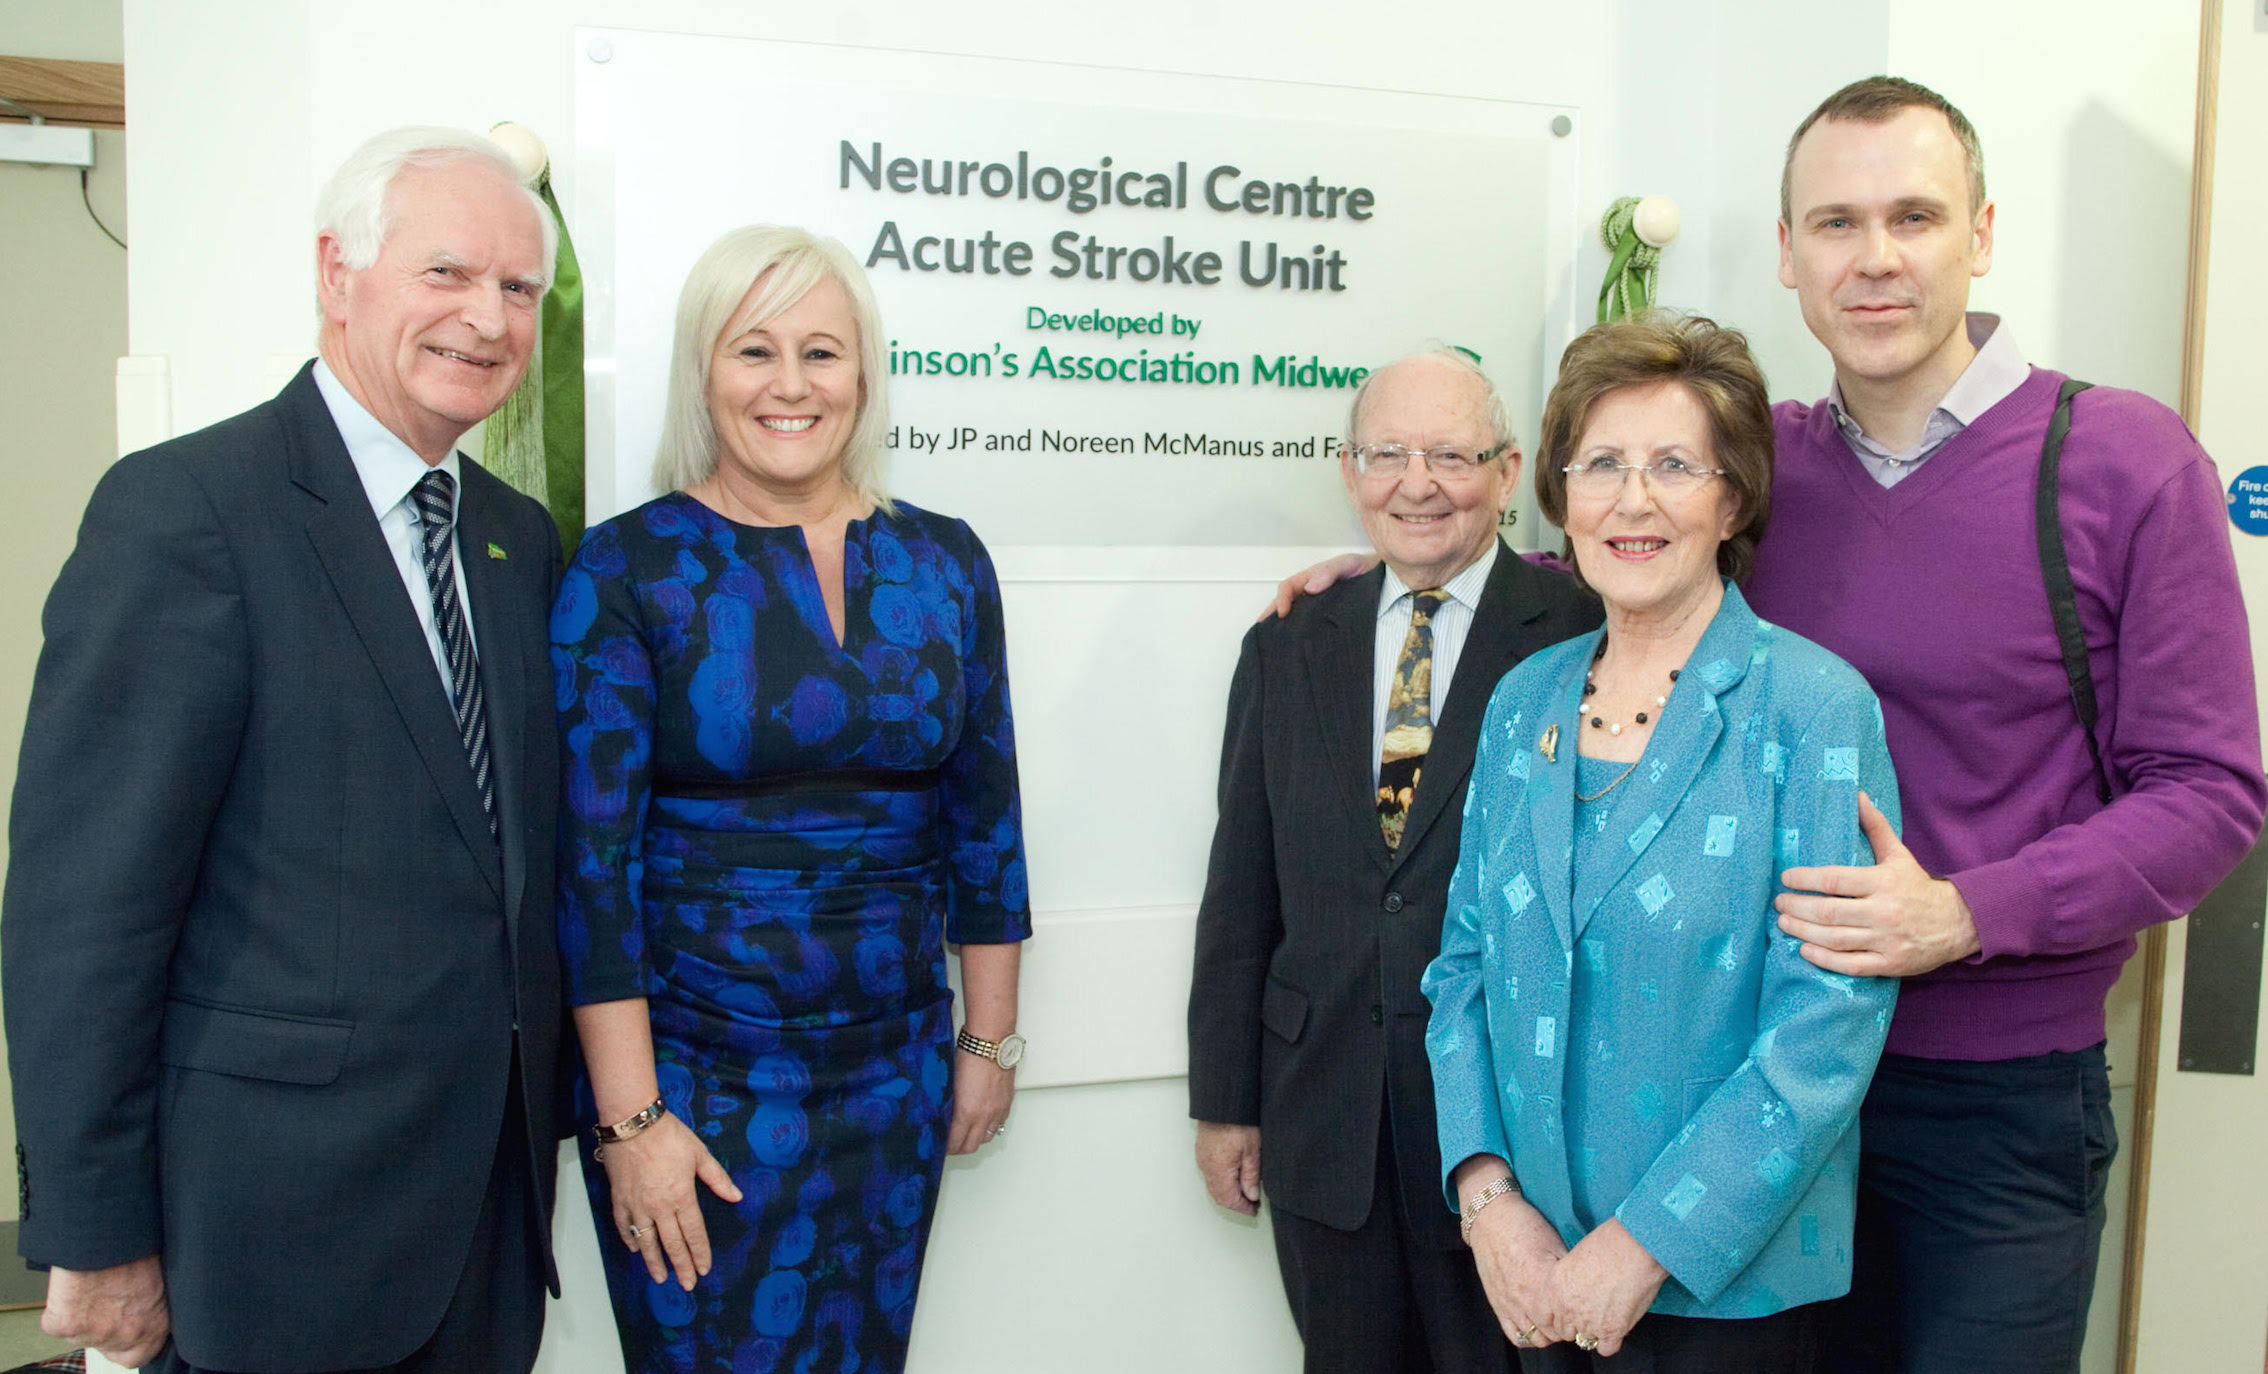 Leben Building Neurological Centre Acute Stroke Unit at University Hospital Limerick